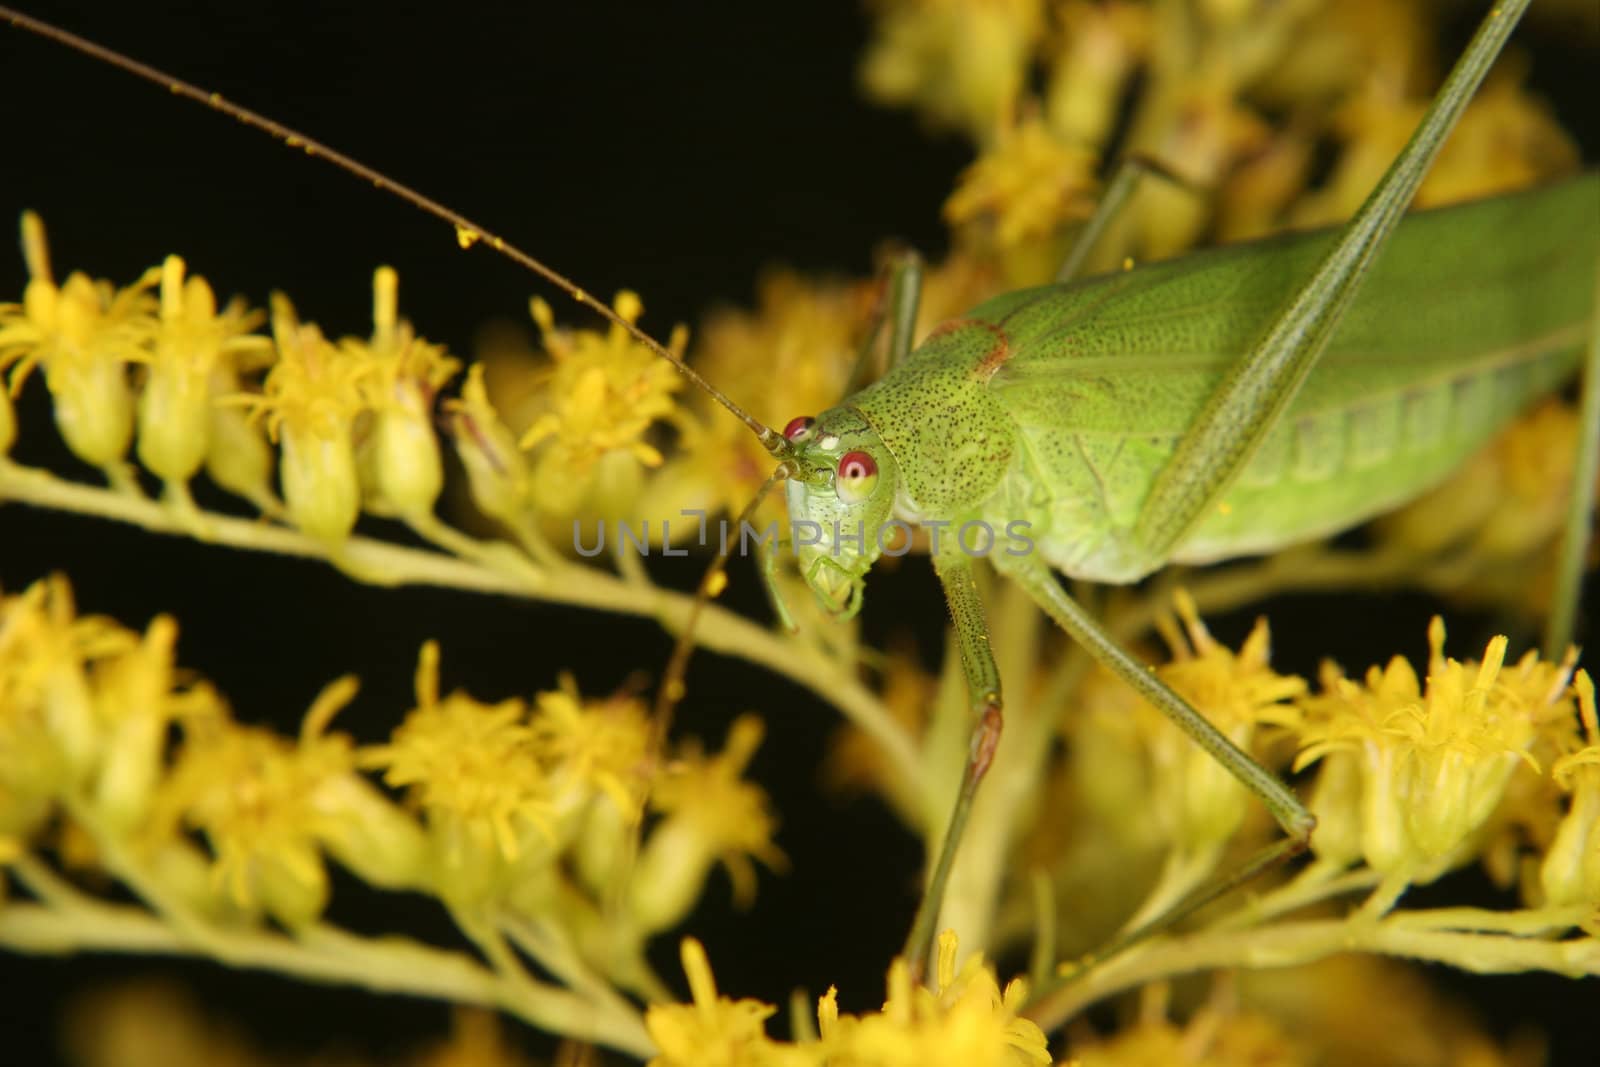 Bush cricket (Phaneroptera falcata) by tdietrich